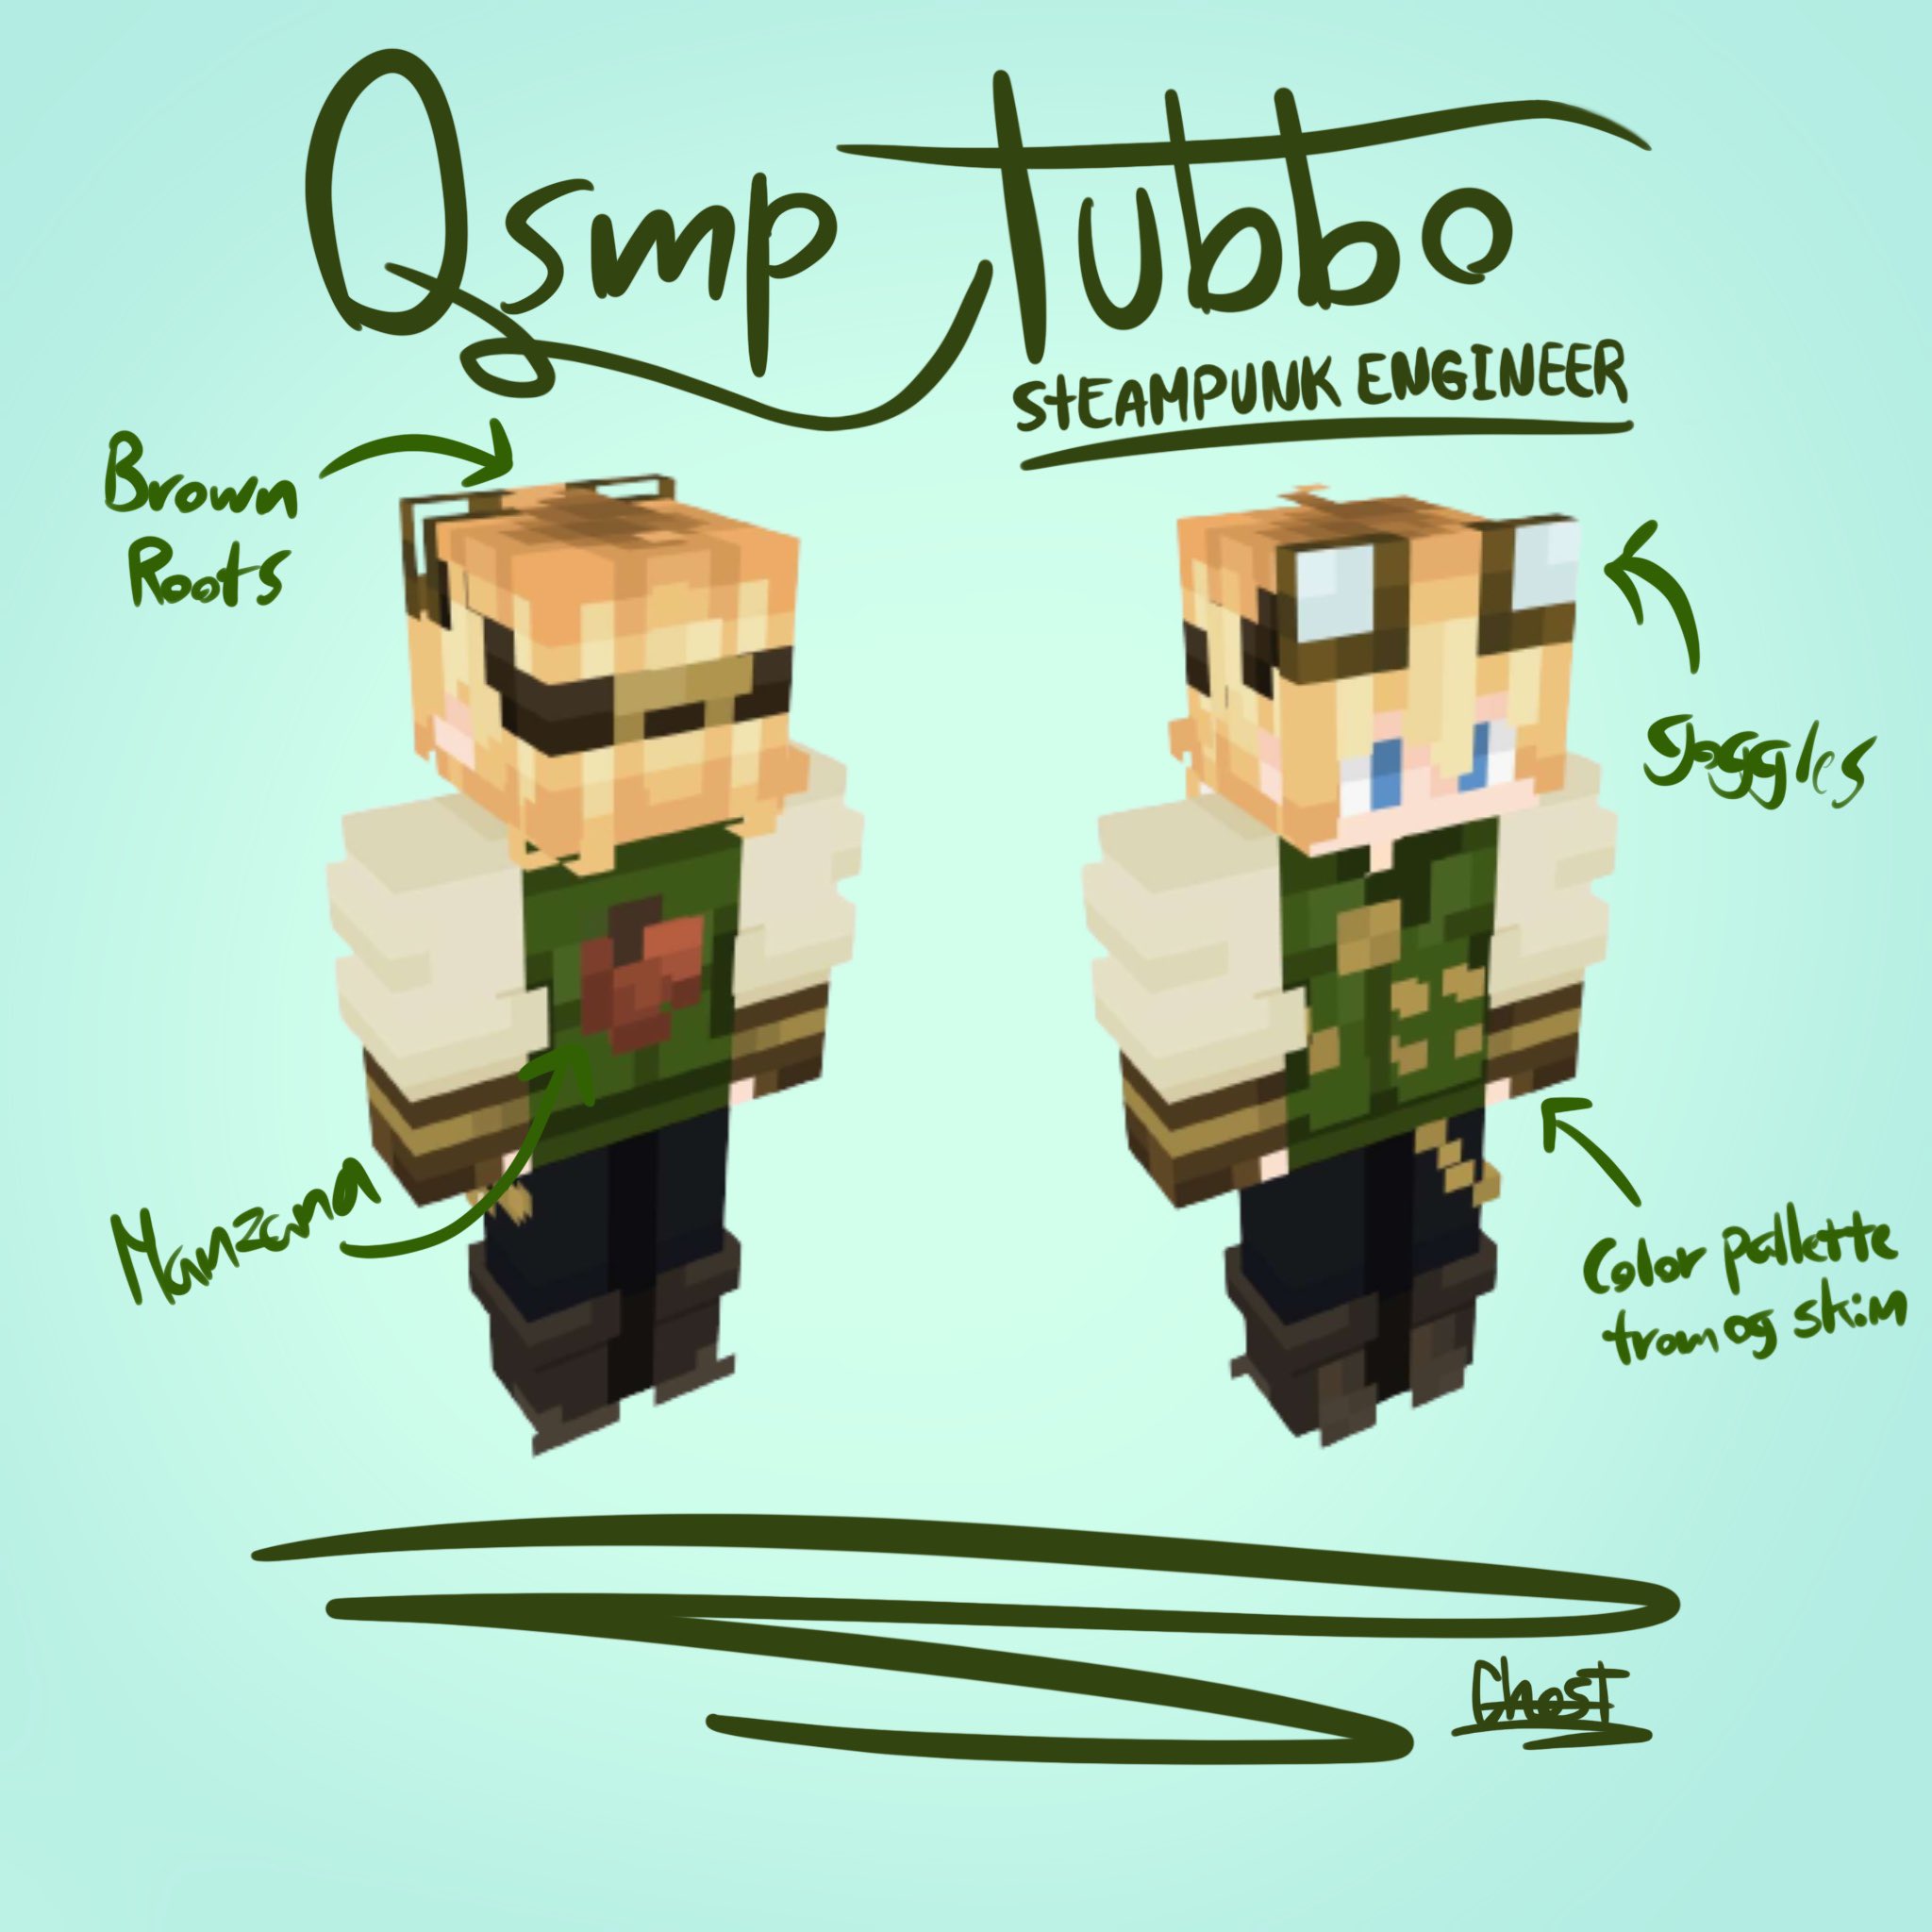 Tubbo Qsmp engineer skin